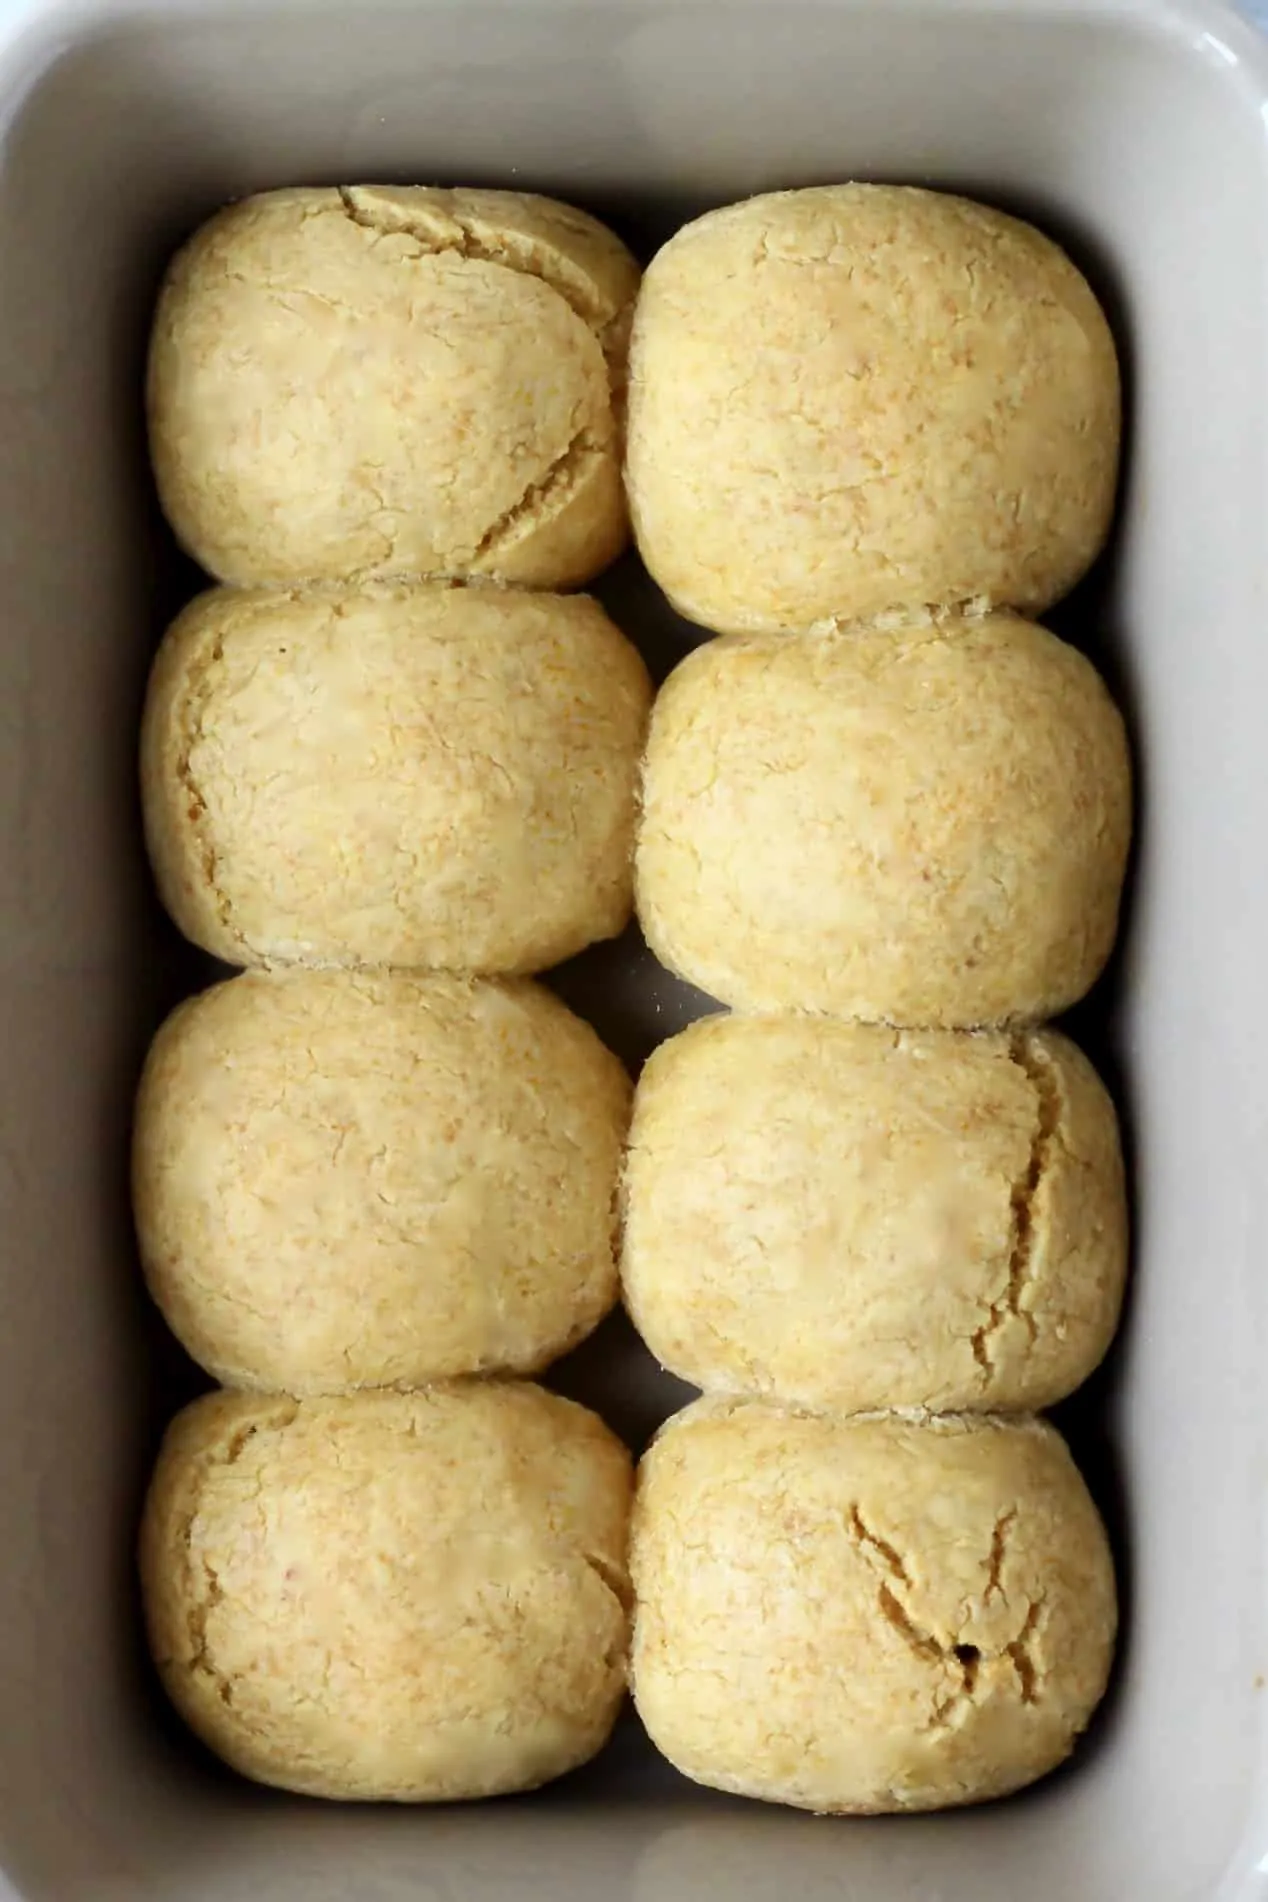 8 gluten-free dinner rolls in a baking dish